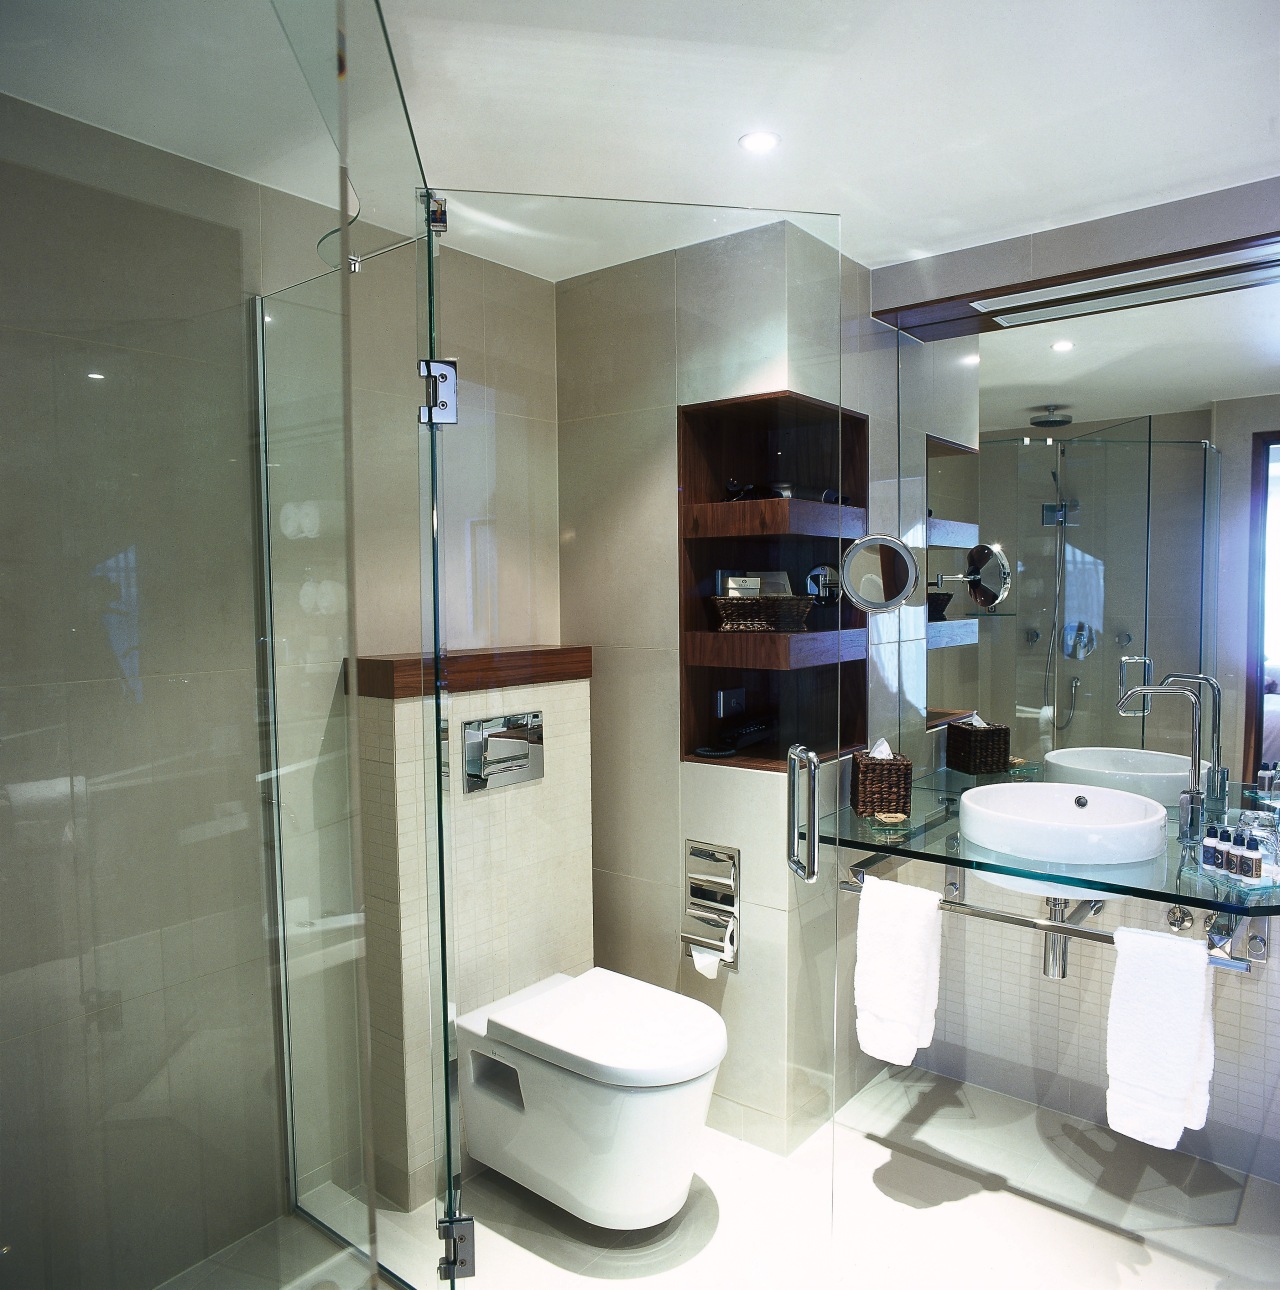 A view of the bathrooms designed by Atlantis. bathroom, interior design, plumbing fixture, real estate, room, gray